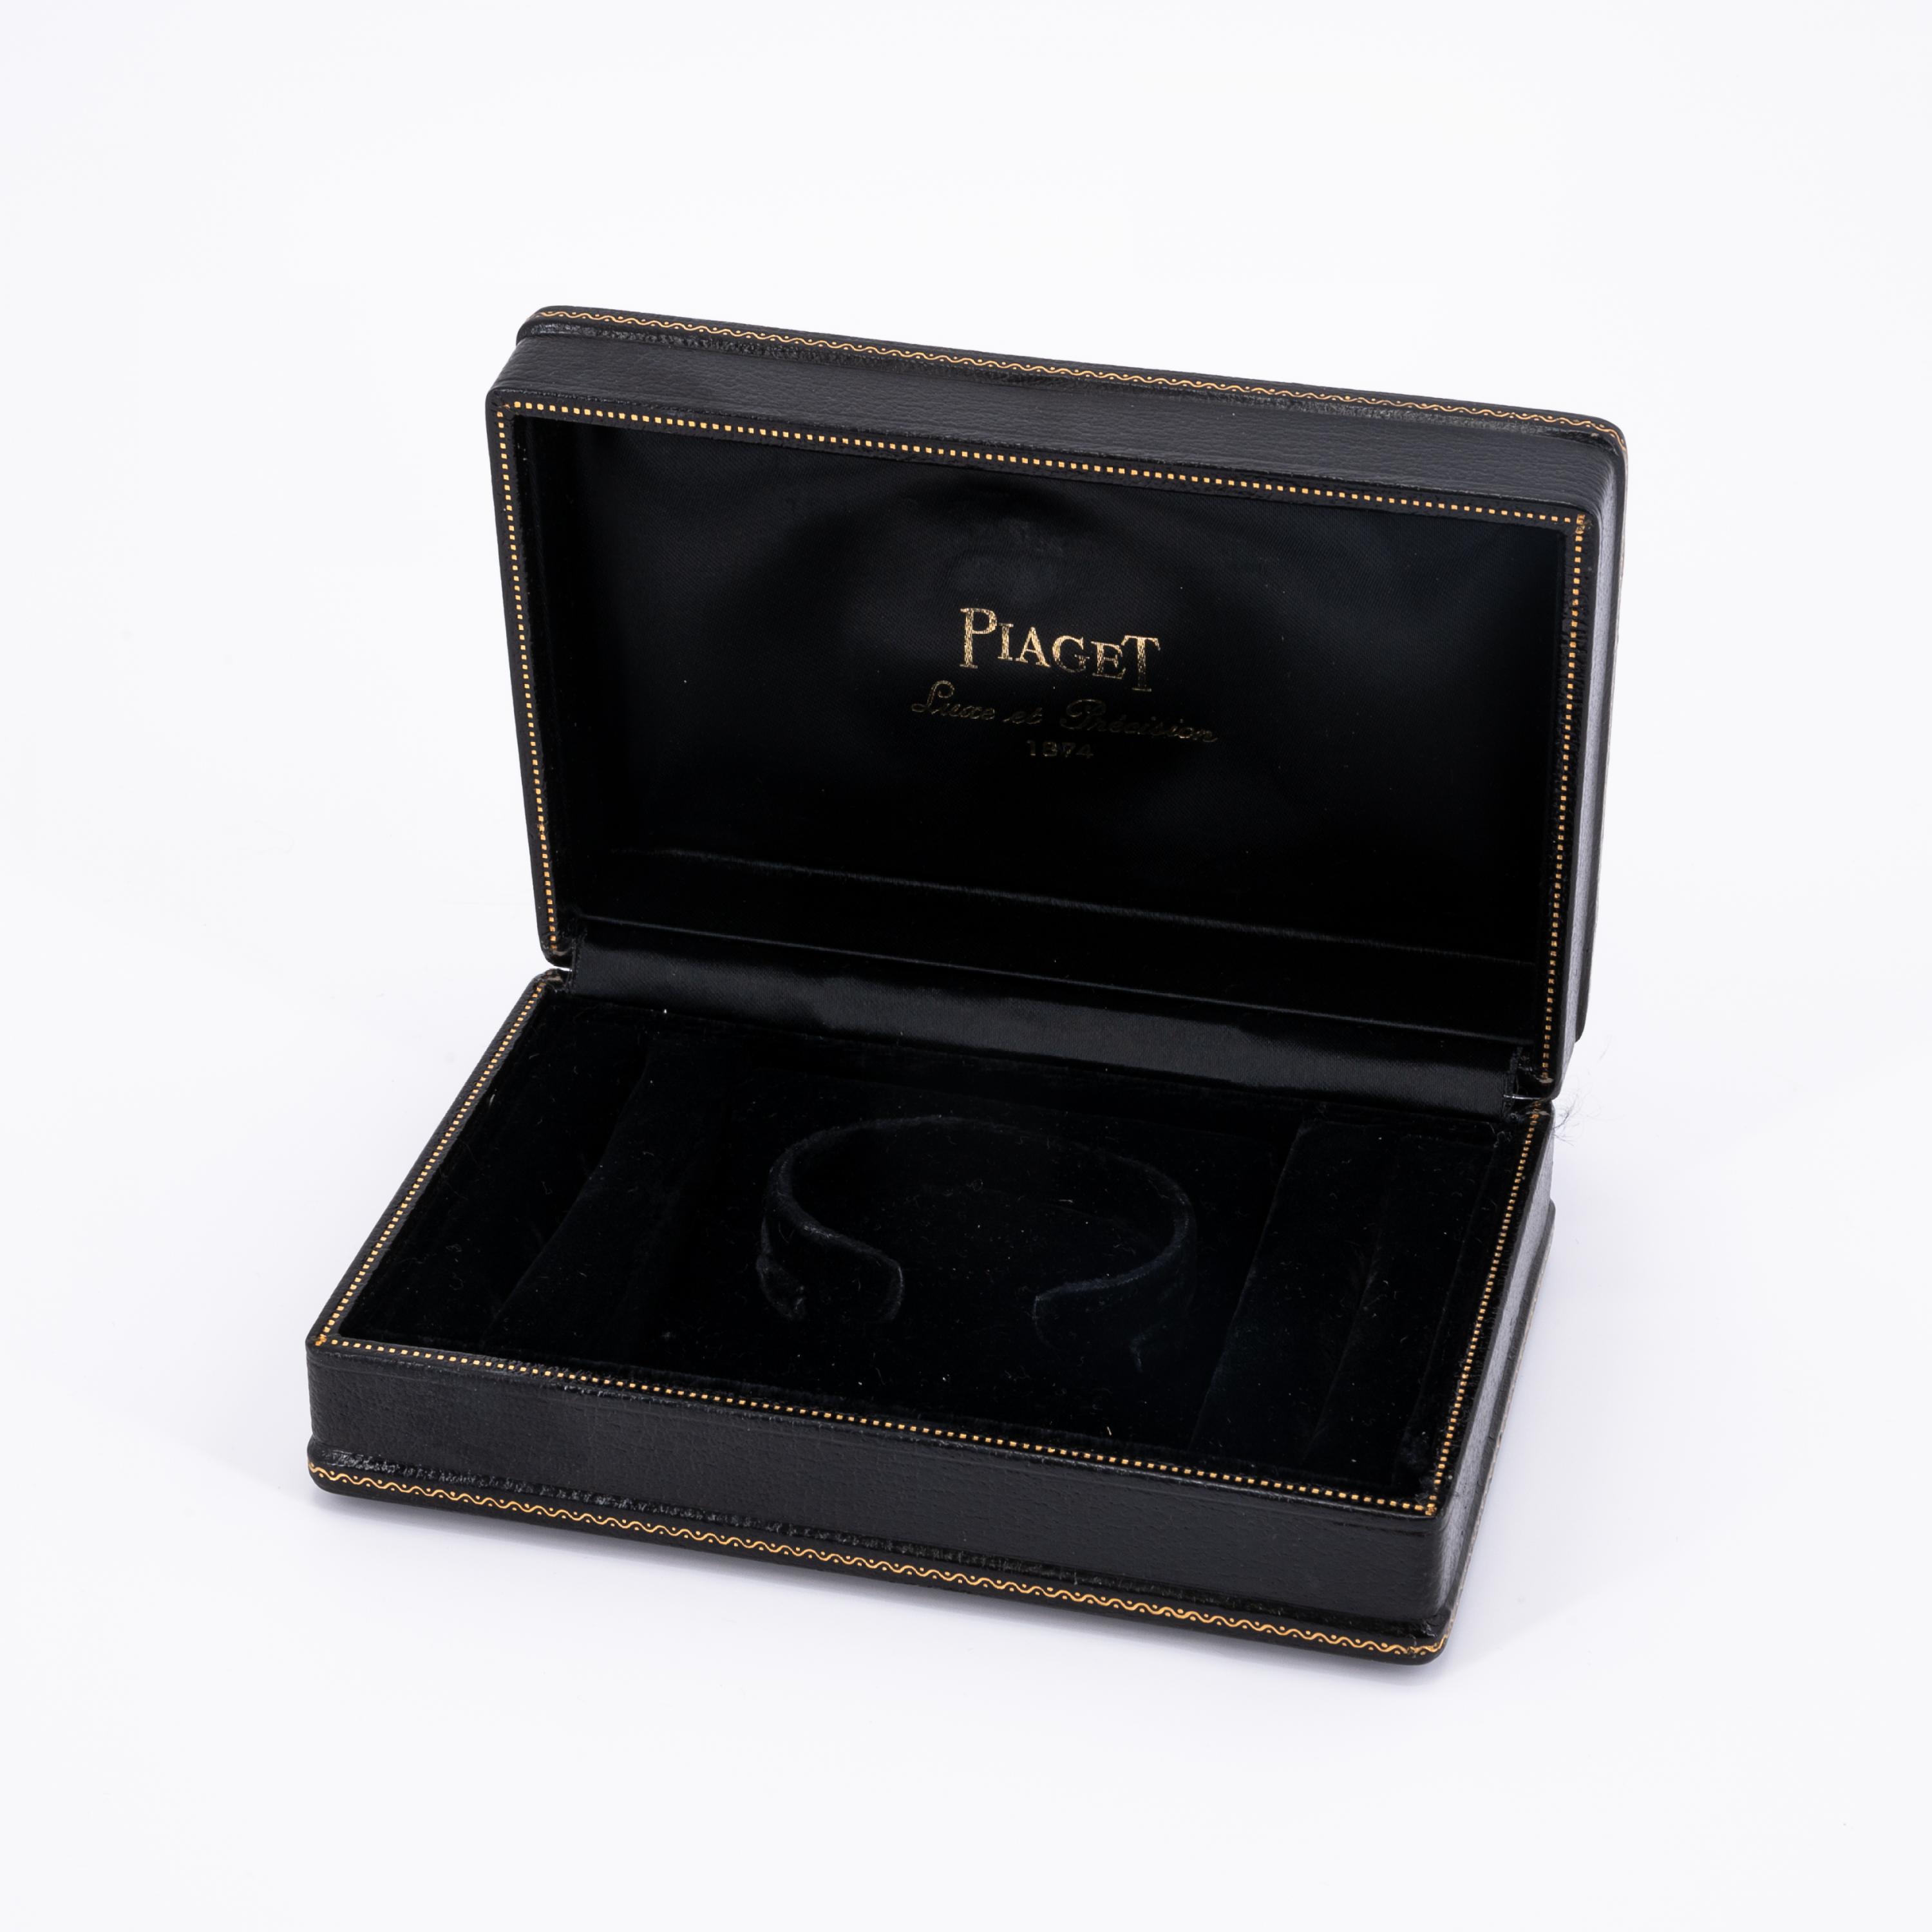 Piaget: Jewel Watch - Image 8 of 8